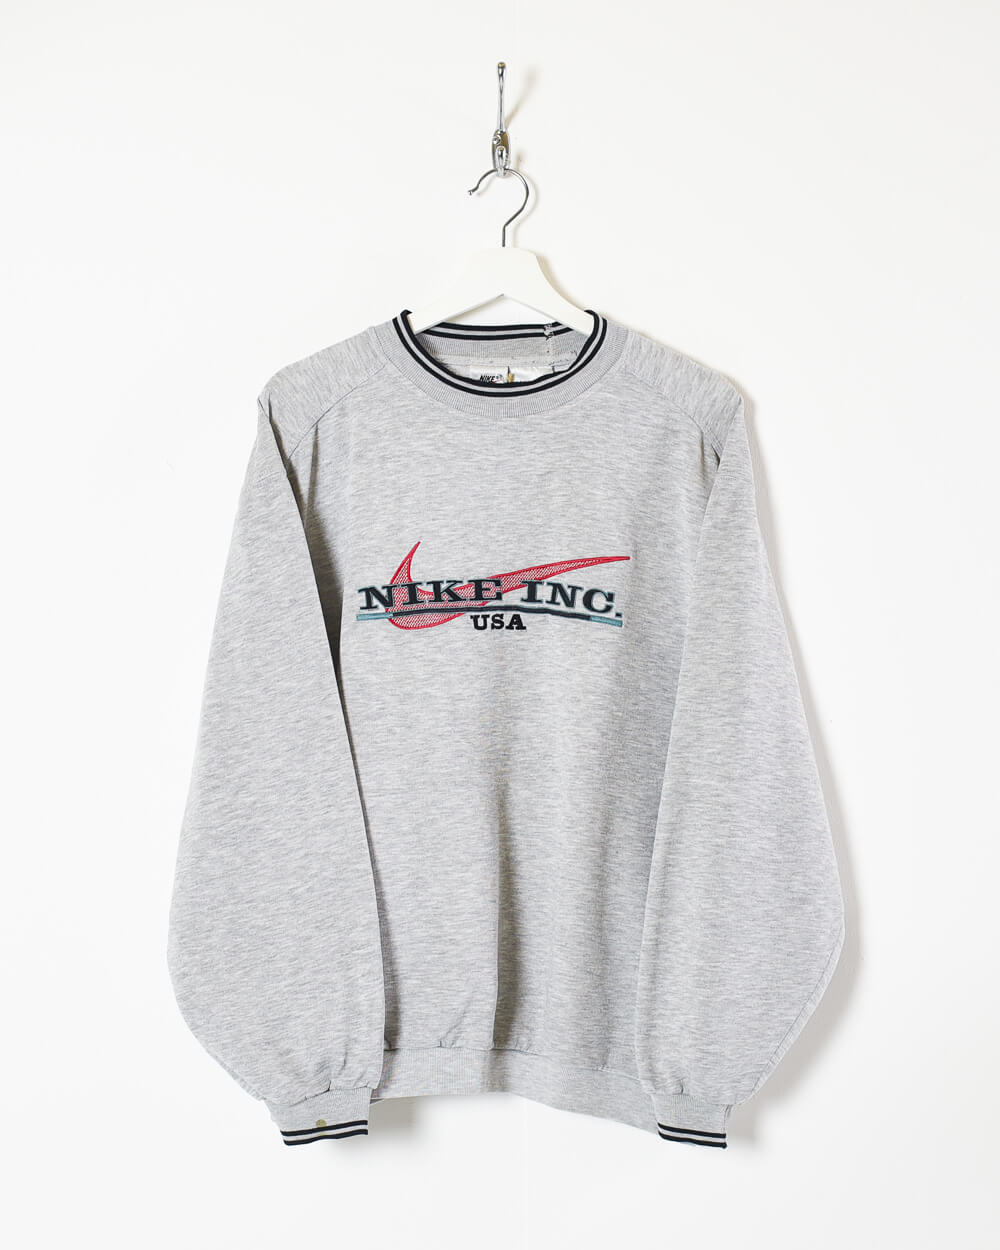 Vintage 90s Cotton Nike Inc USA Sweatshirt - Medium–